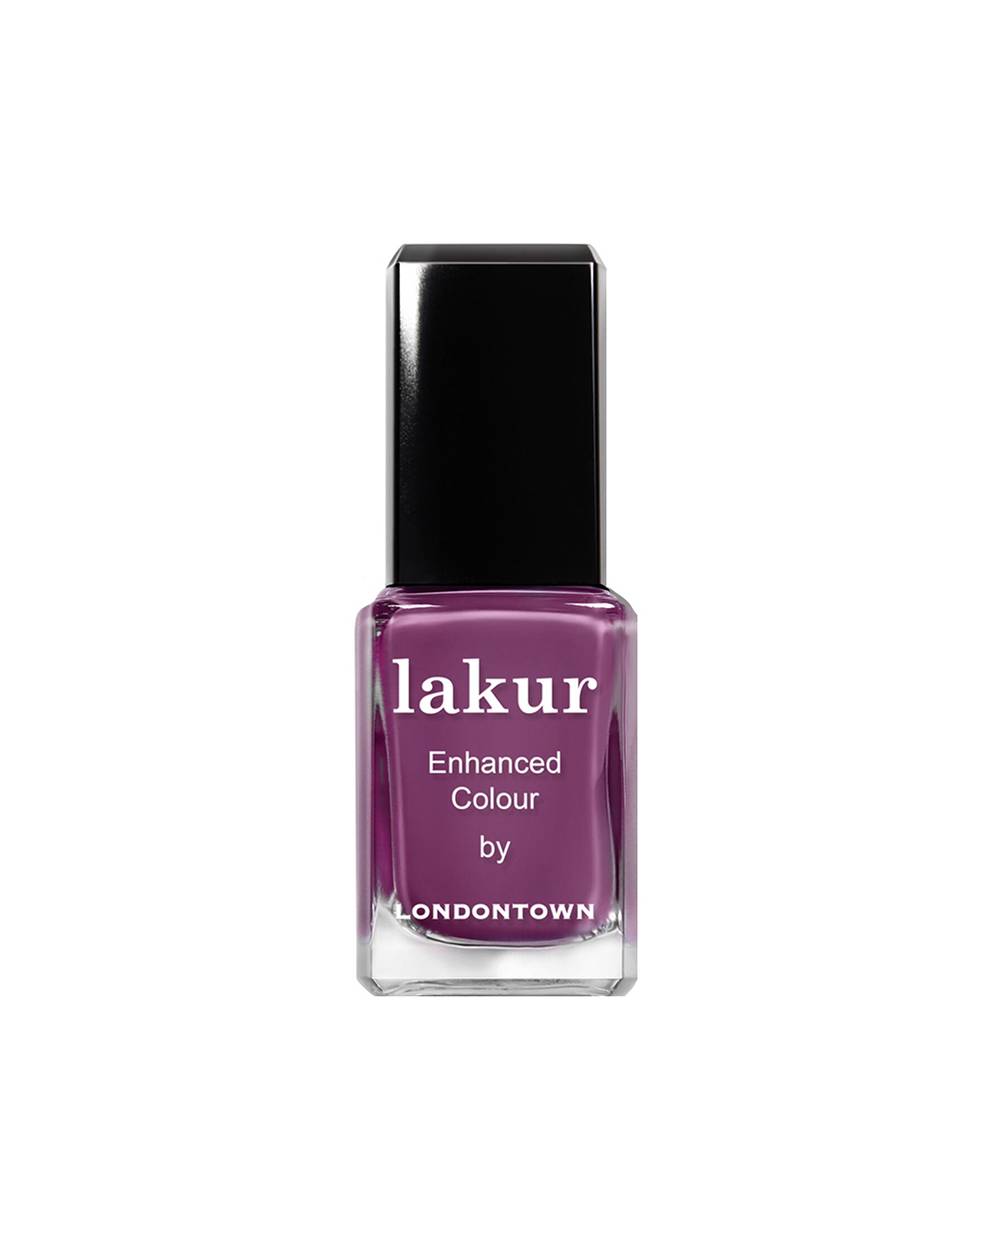 Londontown Lakur - Hibiscus violet